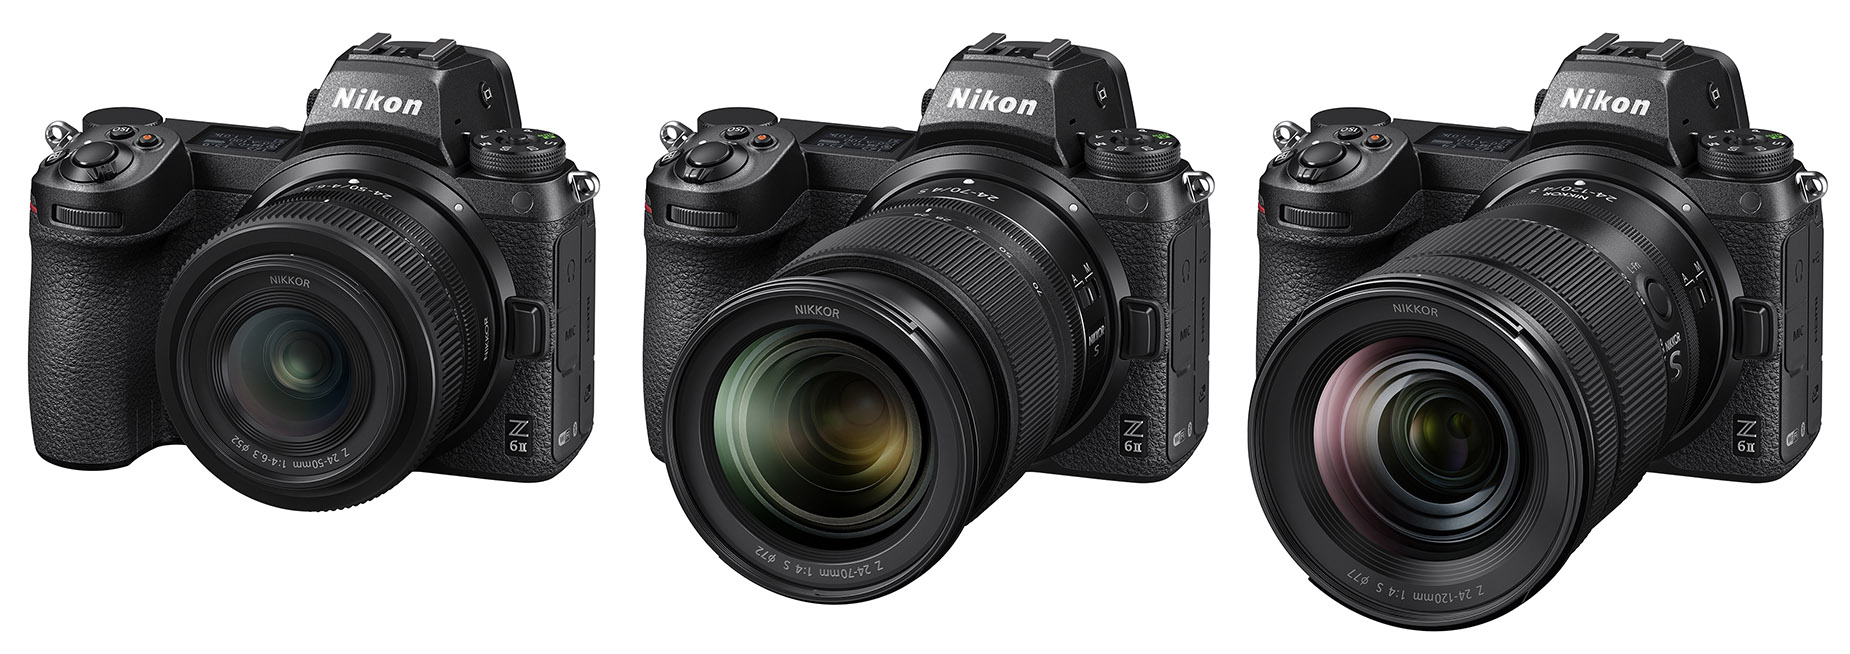 24 120mm f 4g vr. Nikon 24-120 f4. Nikon 24-120mm f/4s. Nikon Nikkor z 24-120mm f/4 s. Nikon z 24-120 f4.